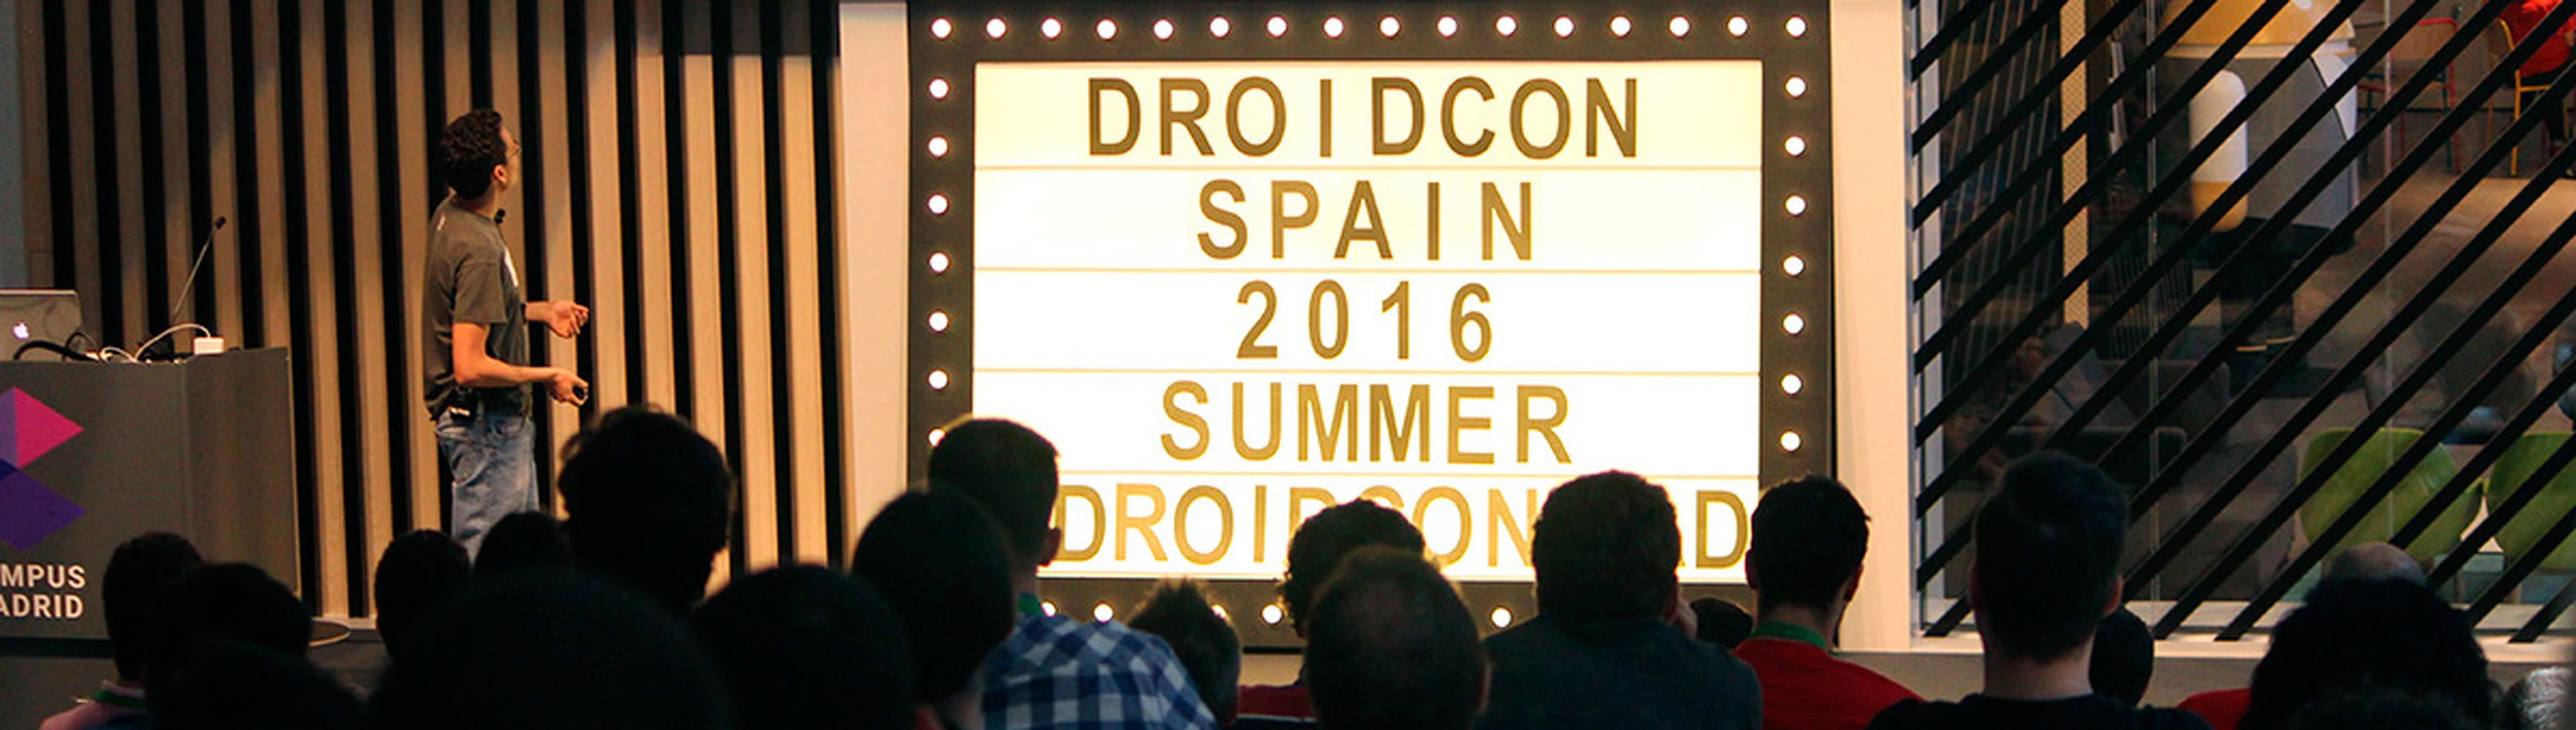 DroidCon Spain 2016